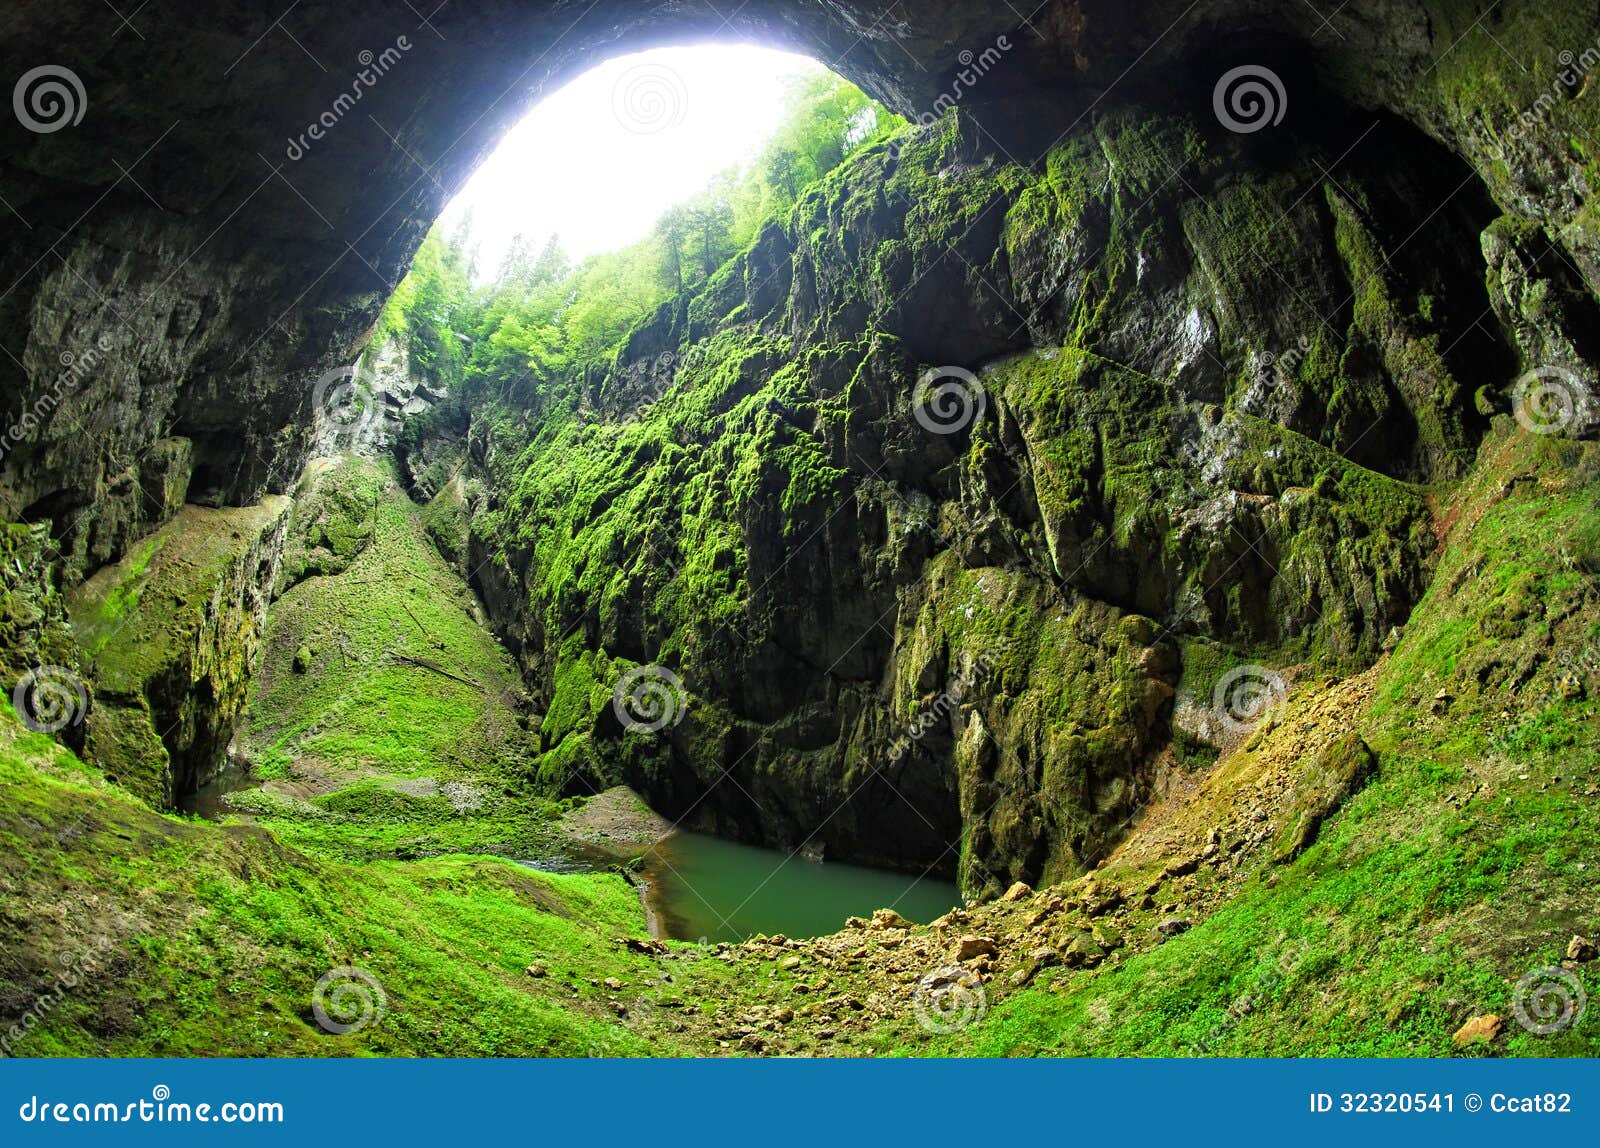 punkevni cave, czech republic